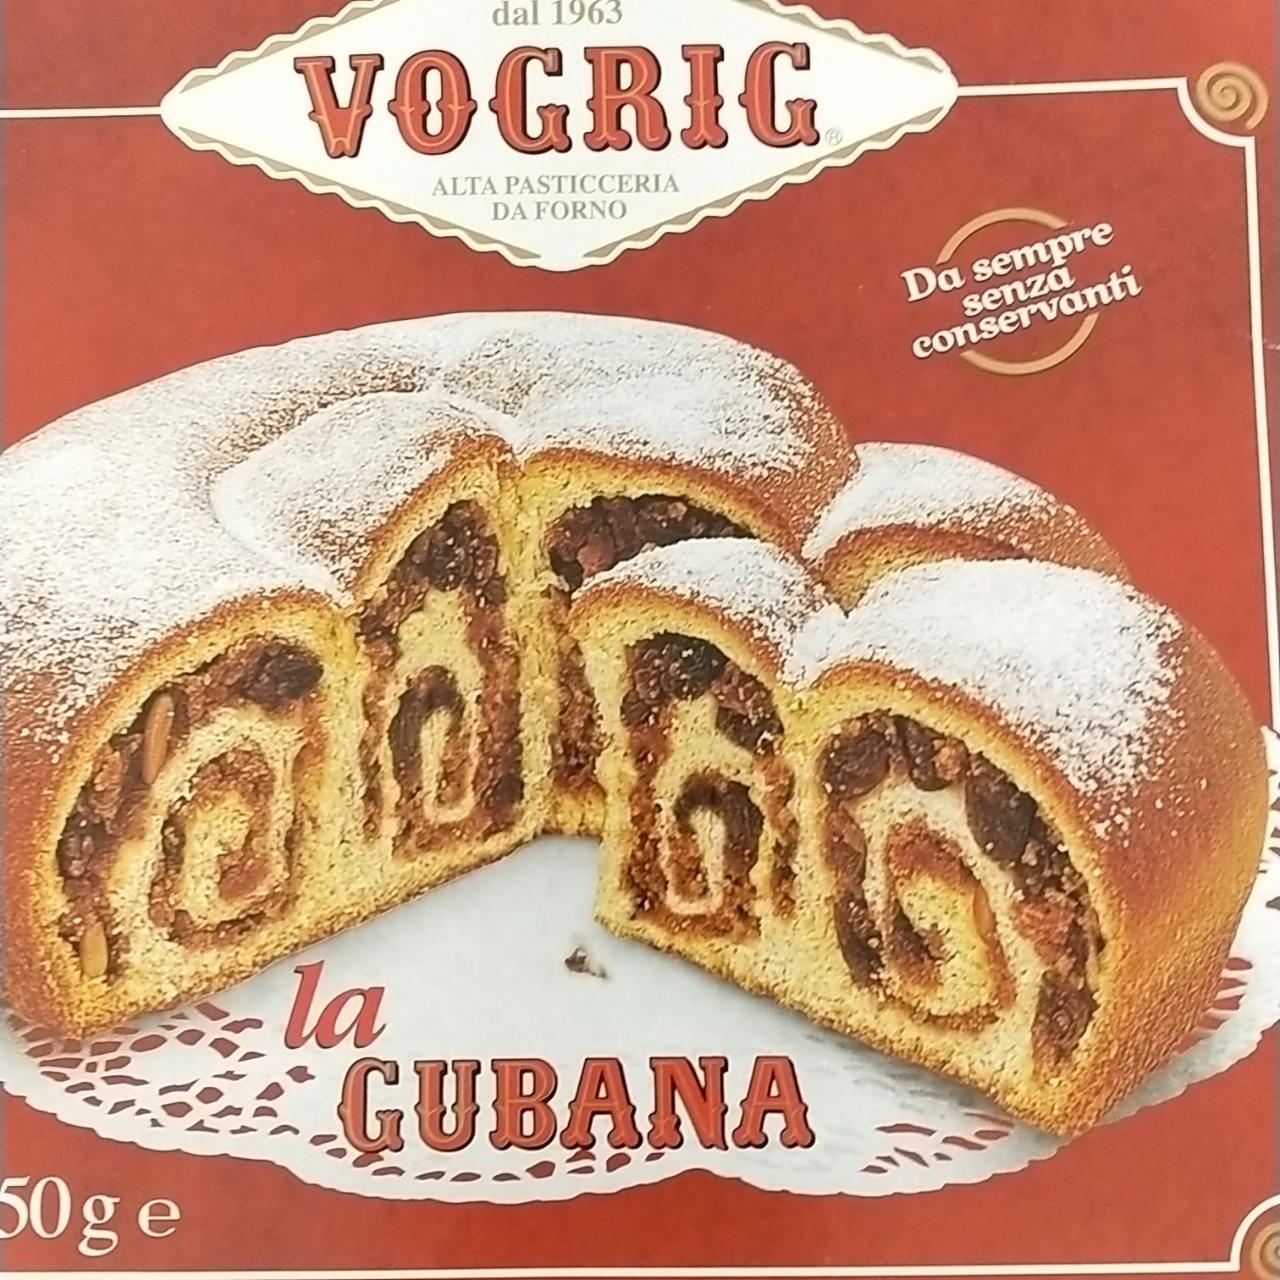 Фото - кекс с изюмом и орехами губана Vogrig